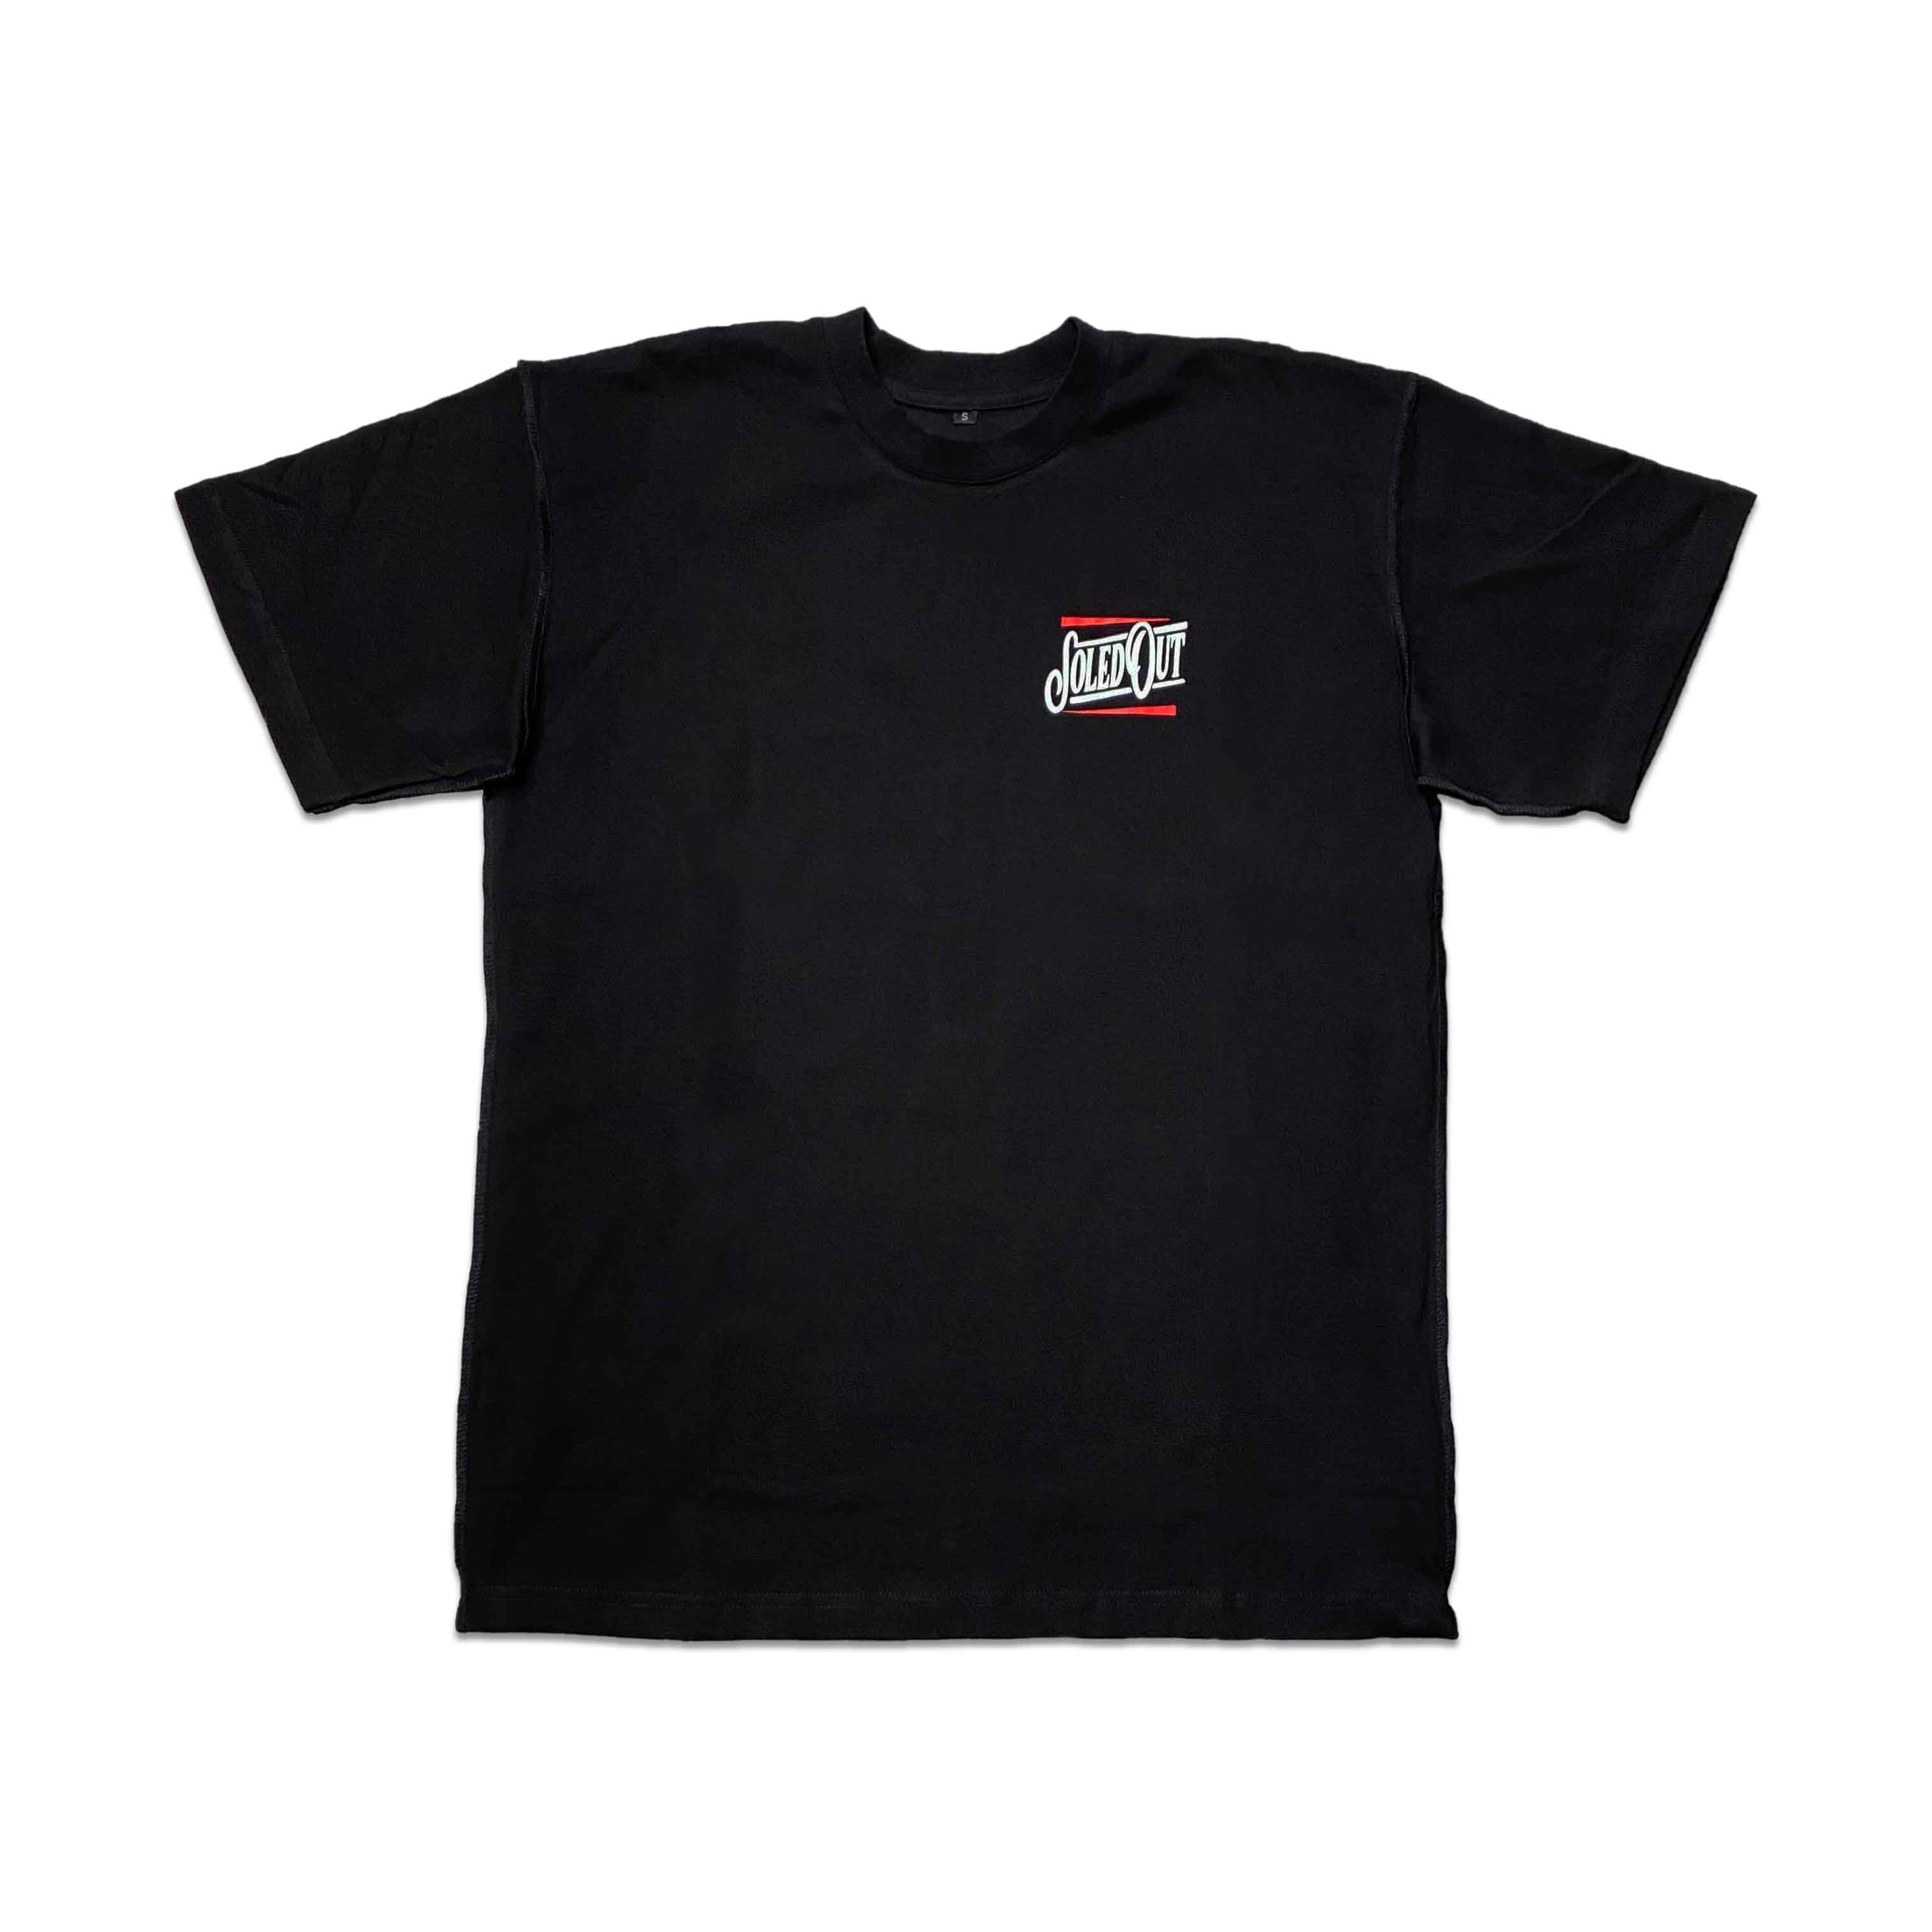 Soled Out T-Shirt &quot;ADVERTISEMENT&quot; Black New Size M